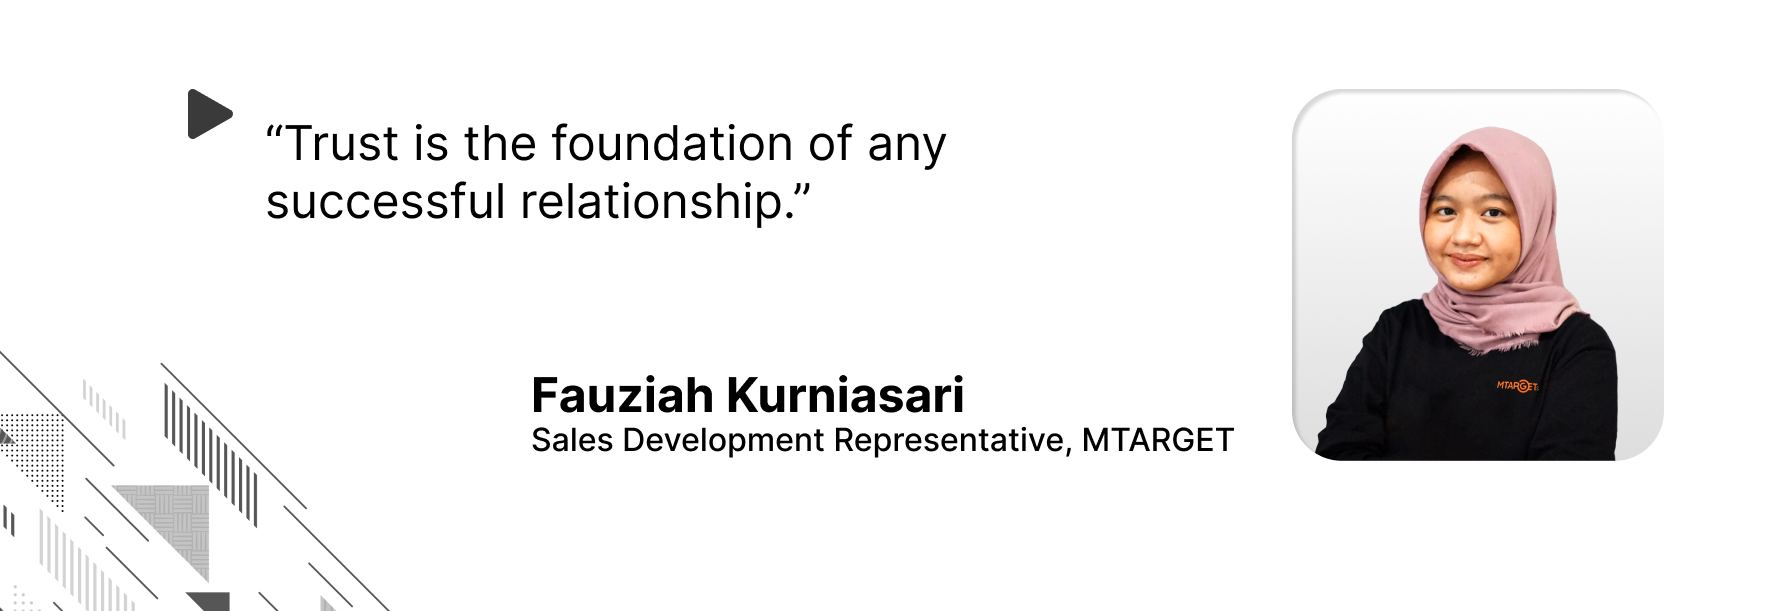 Quote oleh Fauziah Kurniasari, bahwa kepercayaan adalah fondasi dari setiap hubungan yang berhasil.